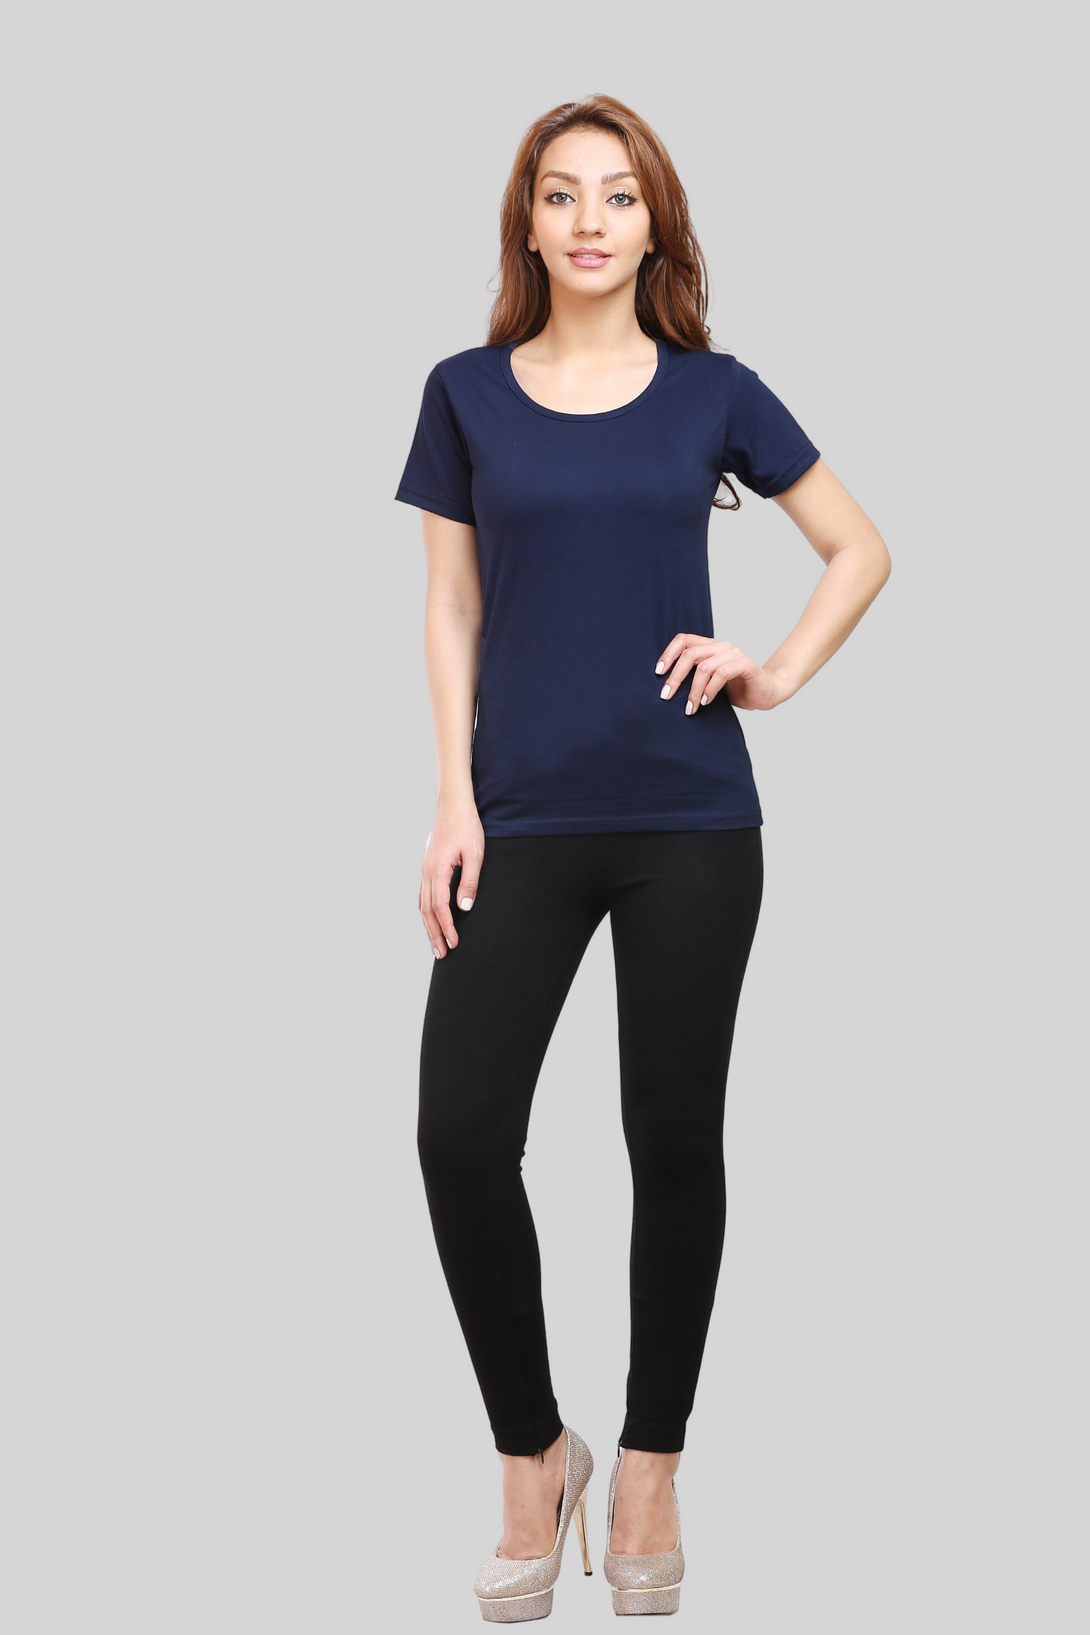 Navy Blue Scoop Neck T-Shirt For Women - WowWaves - 4